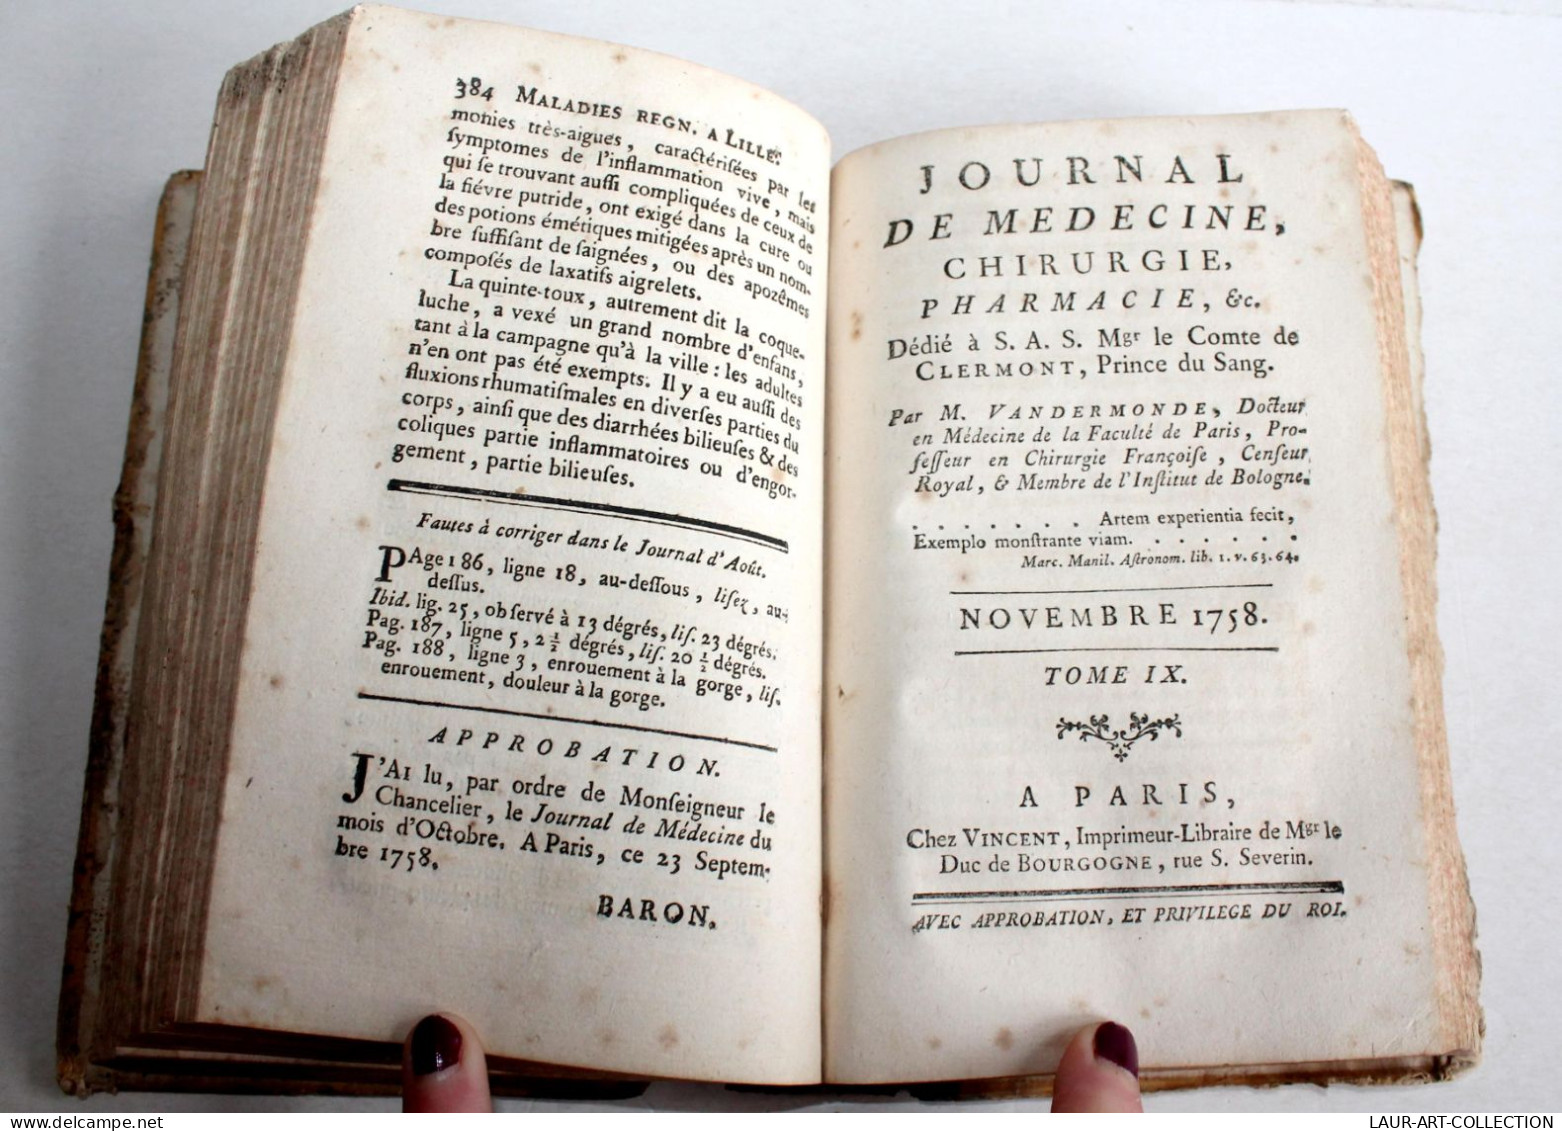 JOURNAL DE MEDECINE CHIRURGIE PHARMACIE Par VANDERMONDE JUIL. A DEC 1758 TOME IX / ANCIEN LIVRE XVIIIe SIECLE (2603.90) - Gesundheit